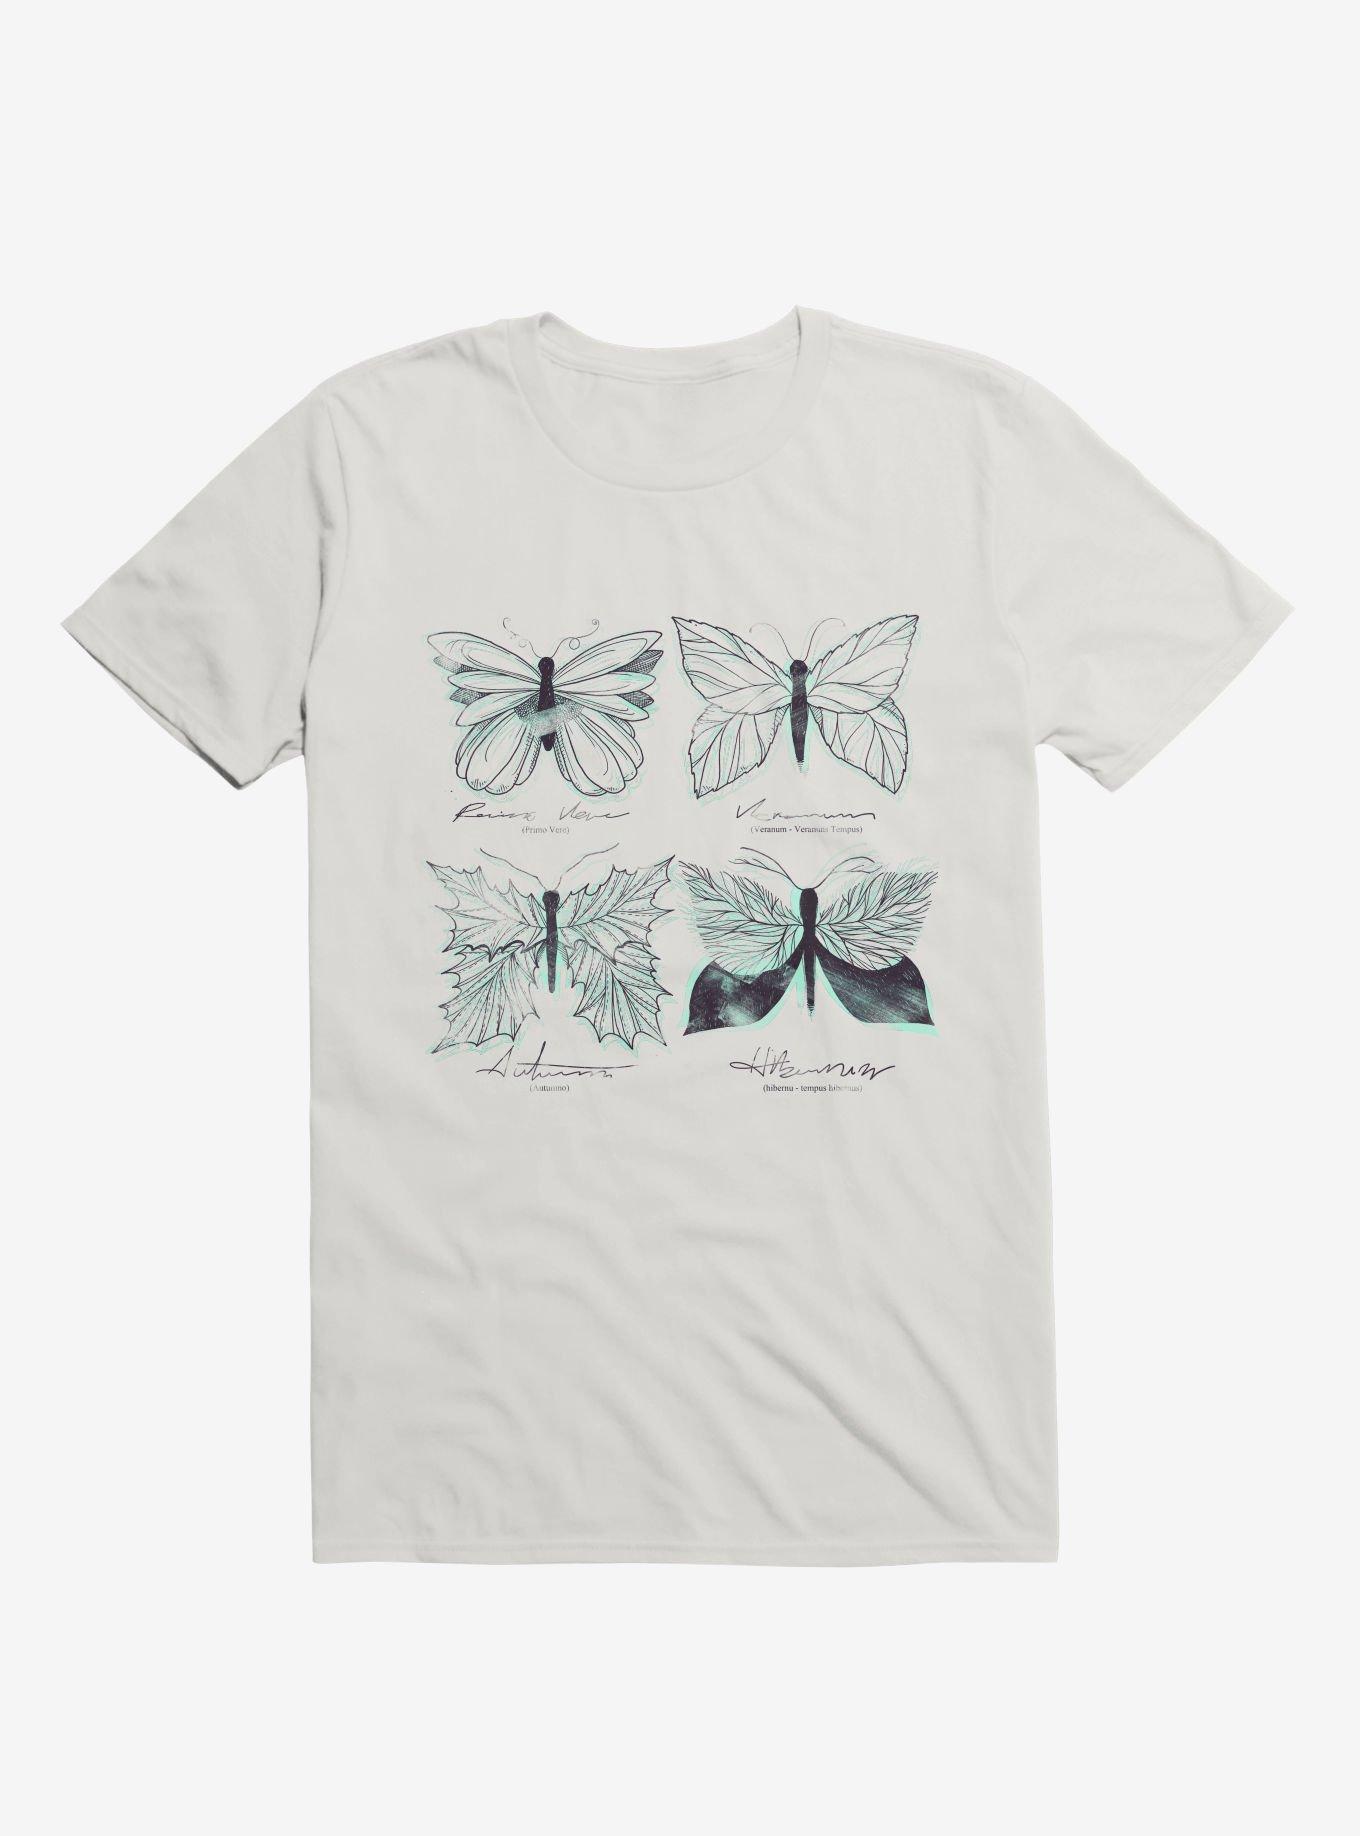 Seasons Change Butterfly White T-Shirt, WHITE, hi-res